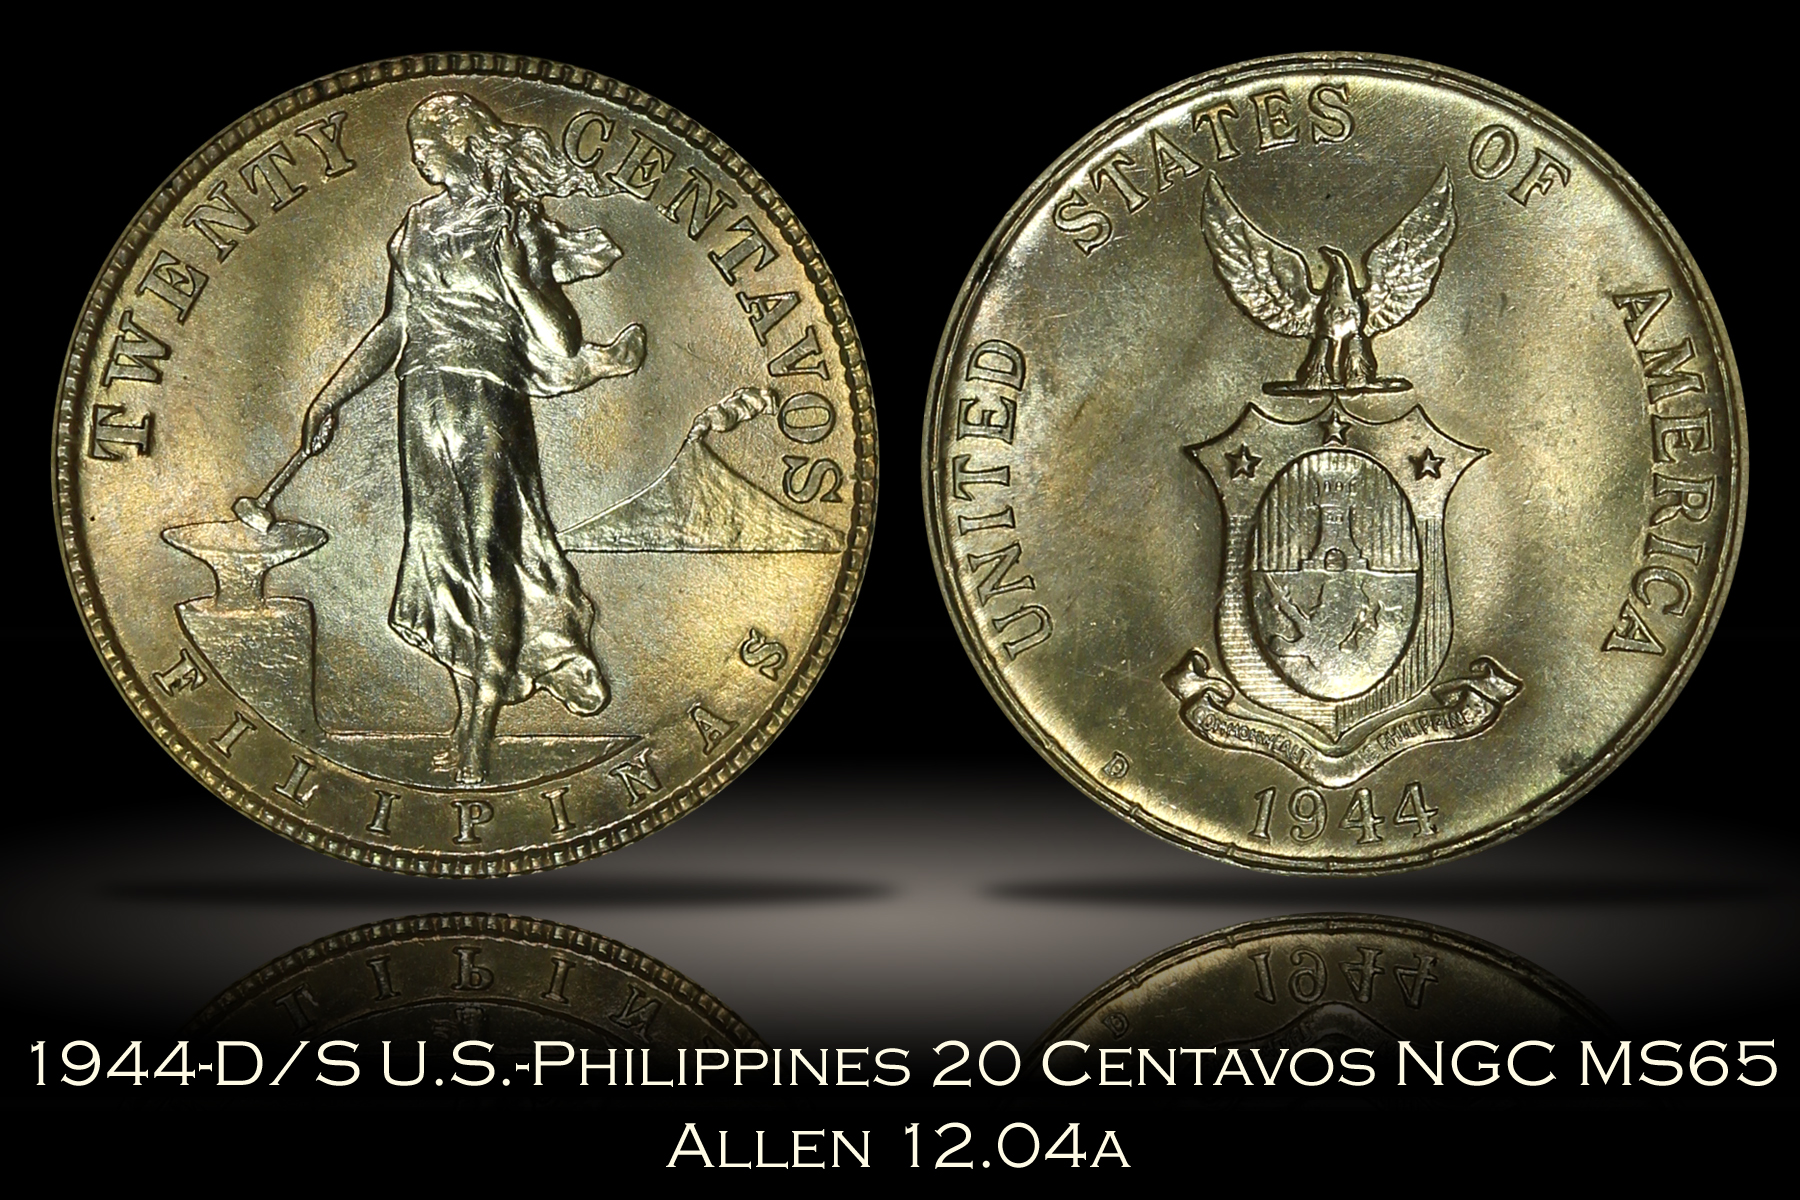 1944-D/S U.S.-Philippines 20 Centavos NGC MS65 Allen 12.04a